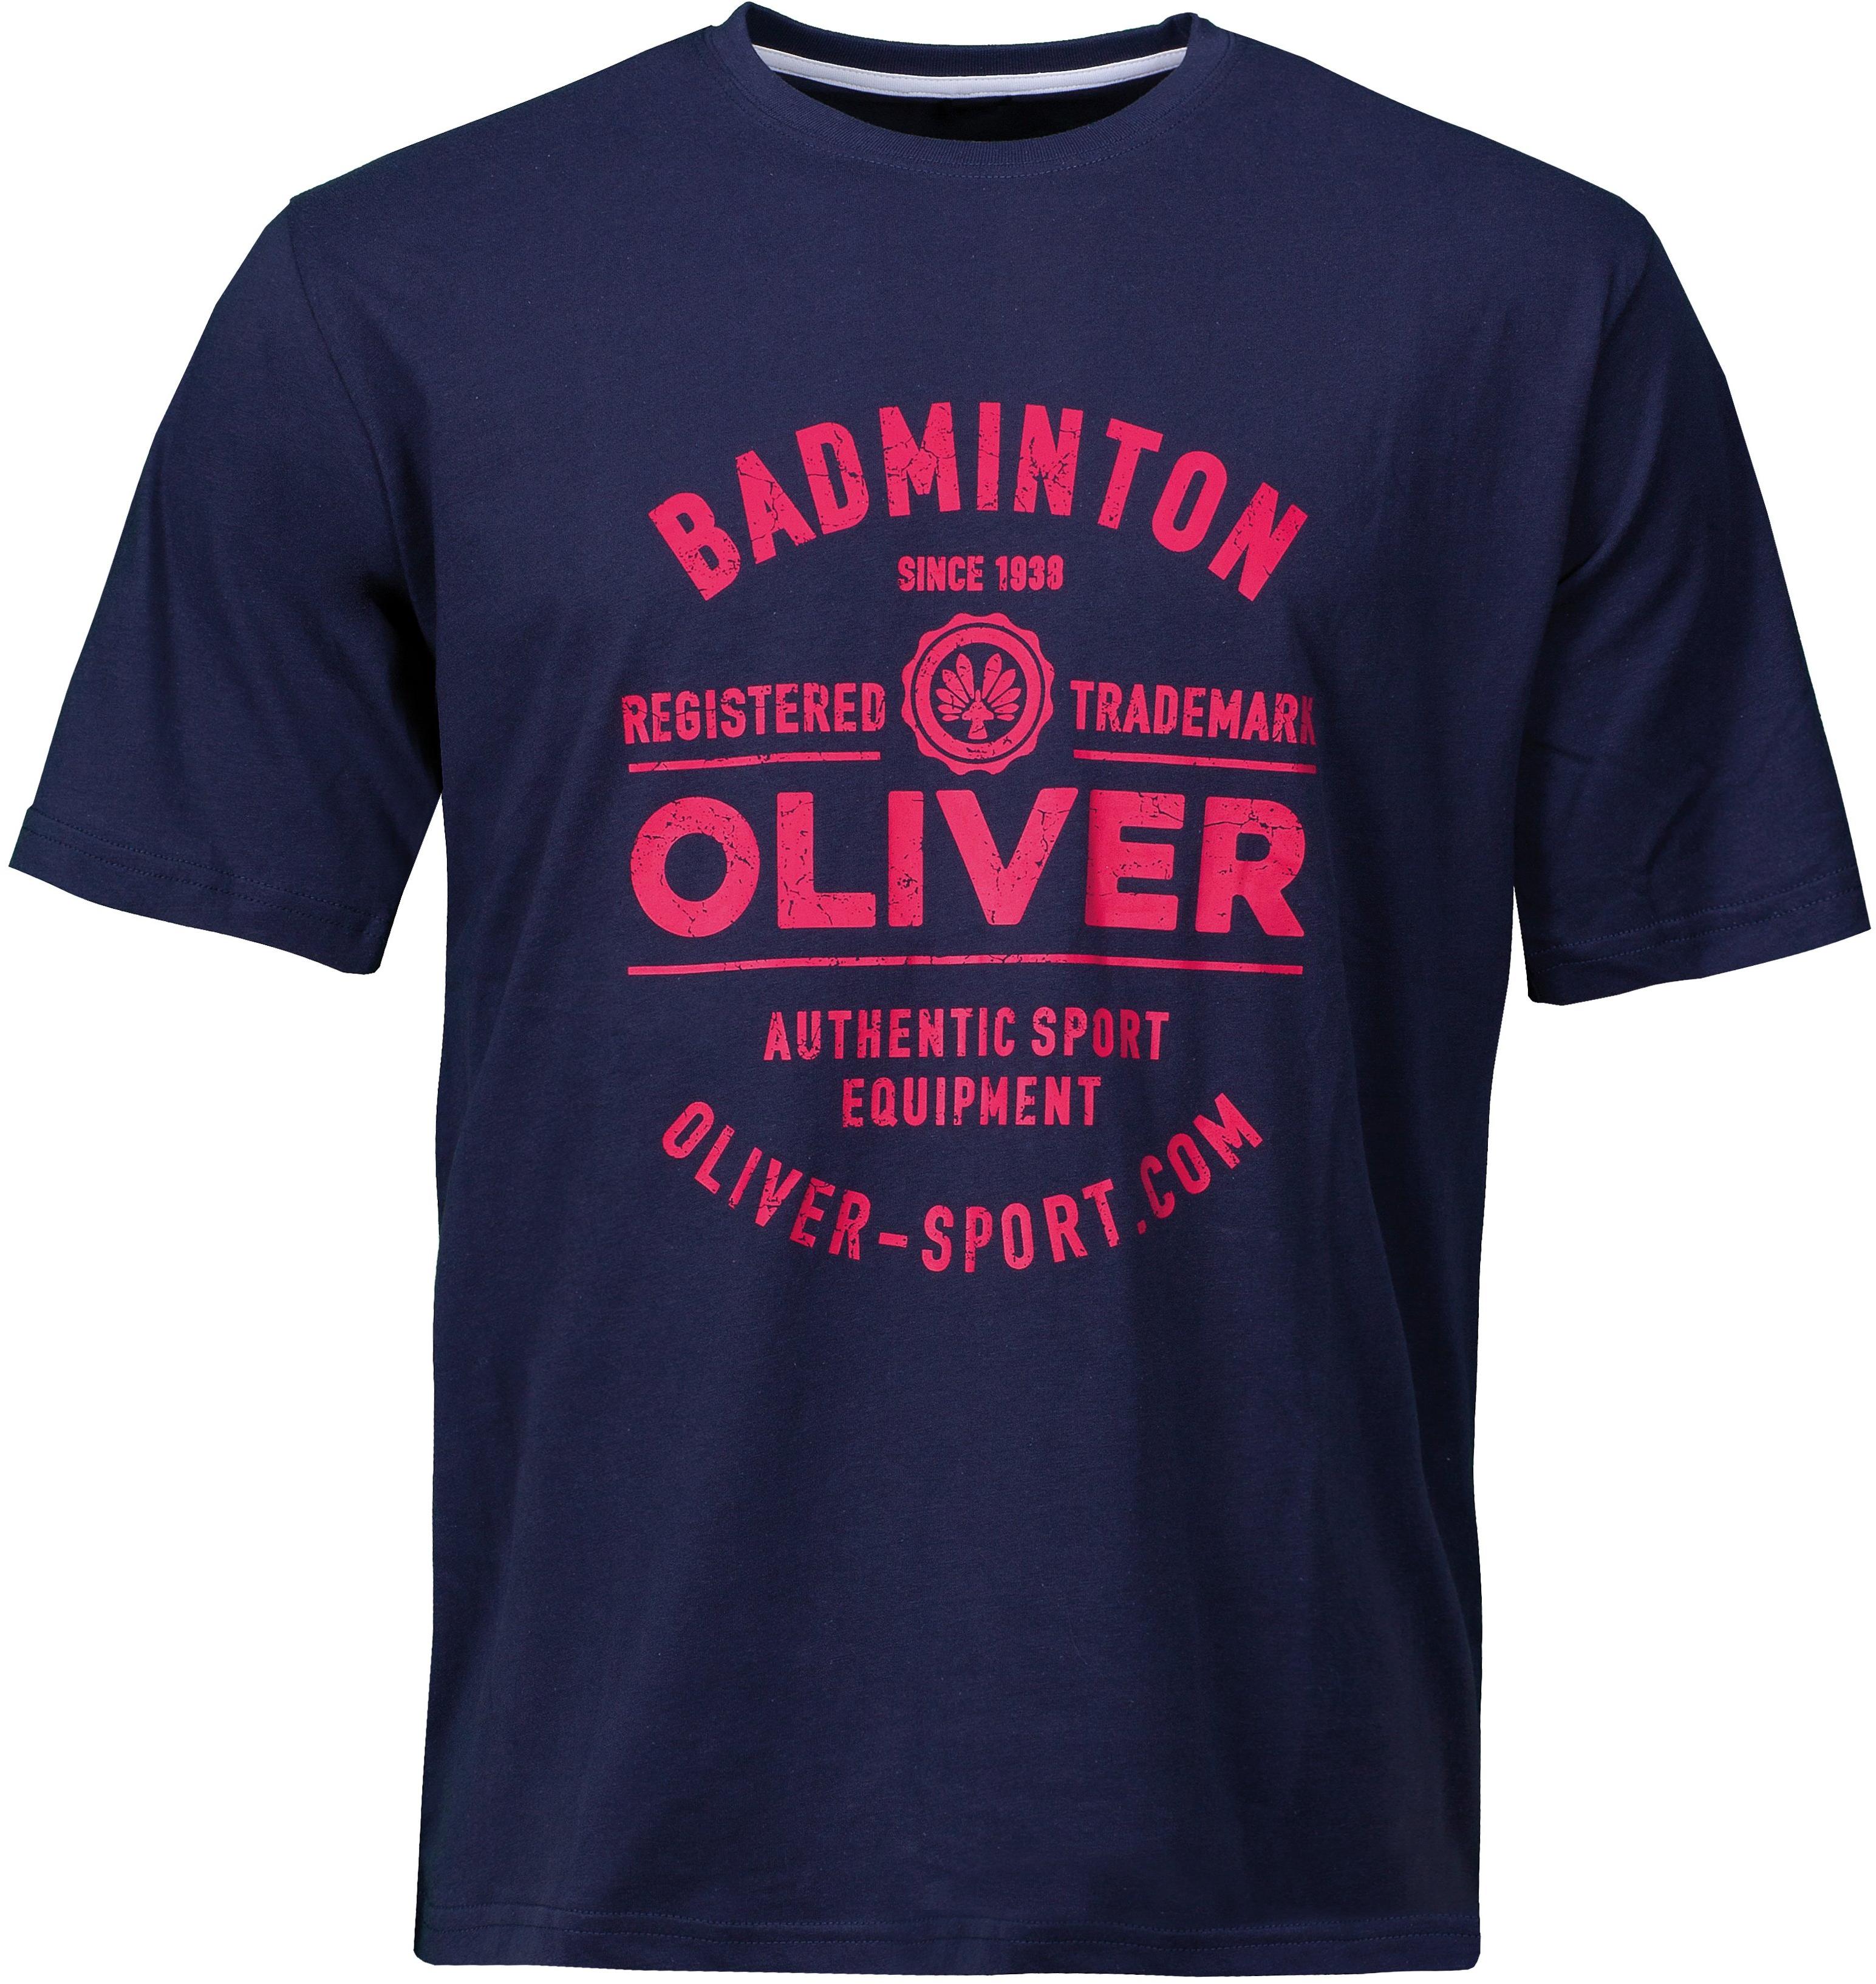 Oliver Badminton T-Shirt XS